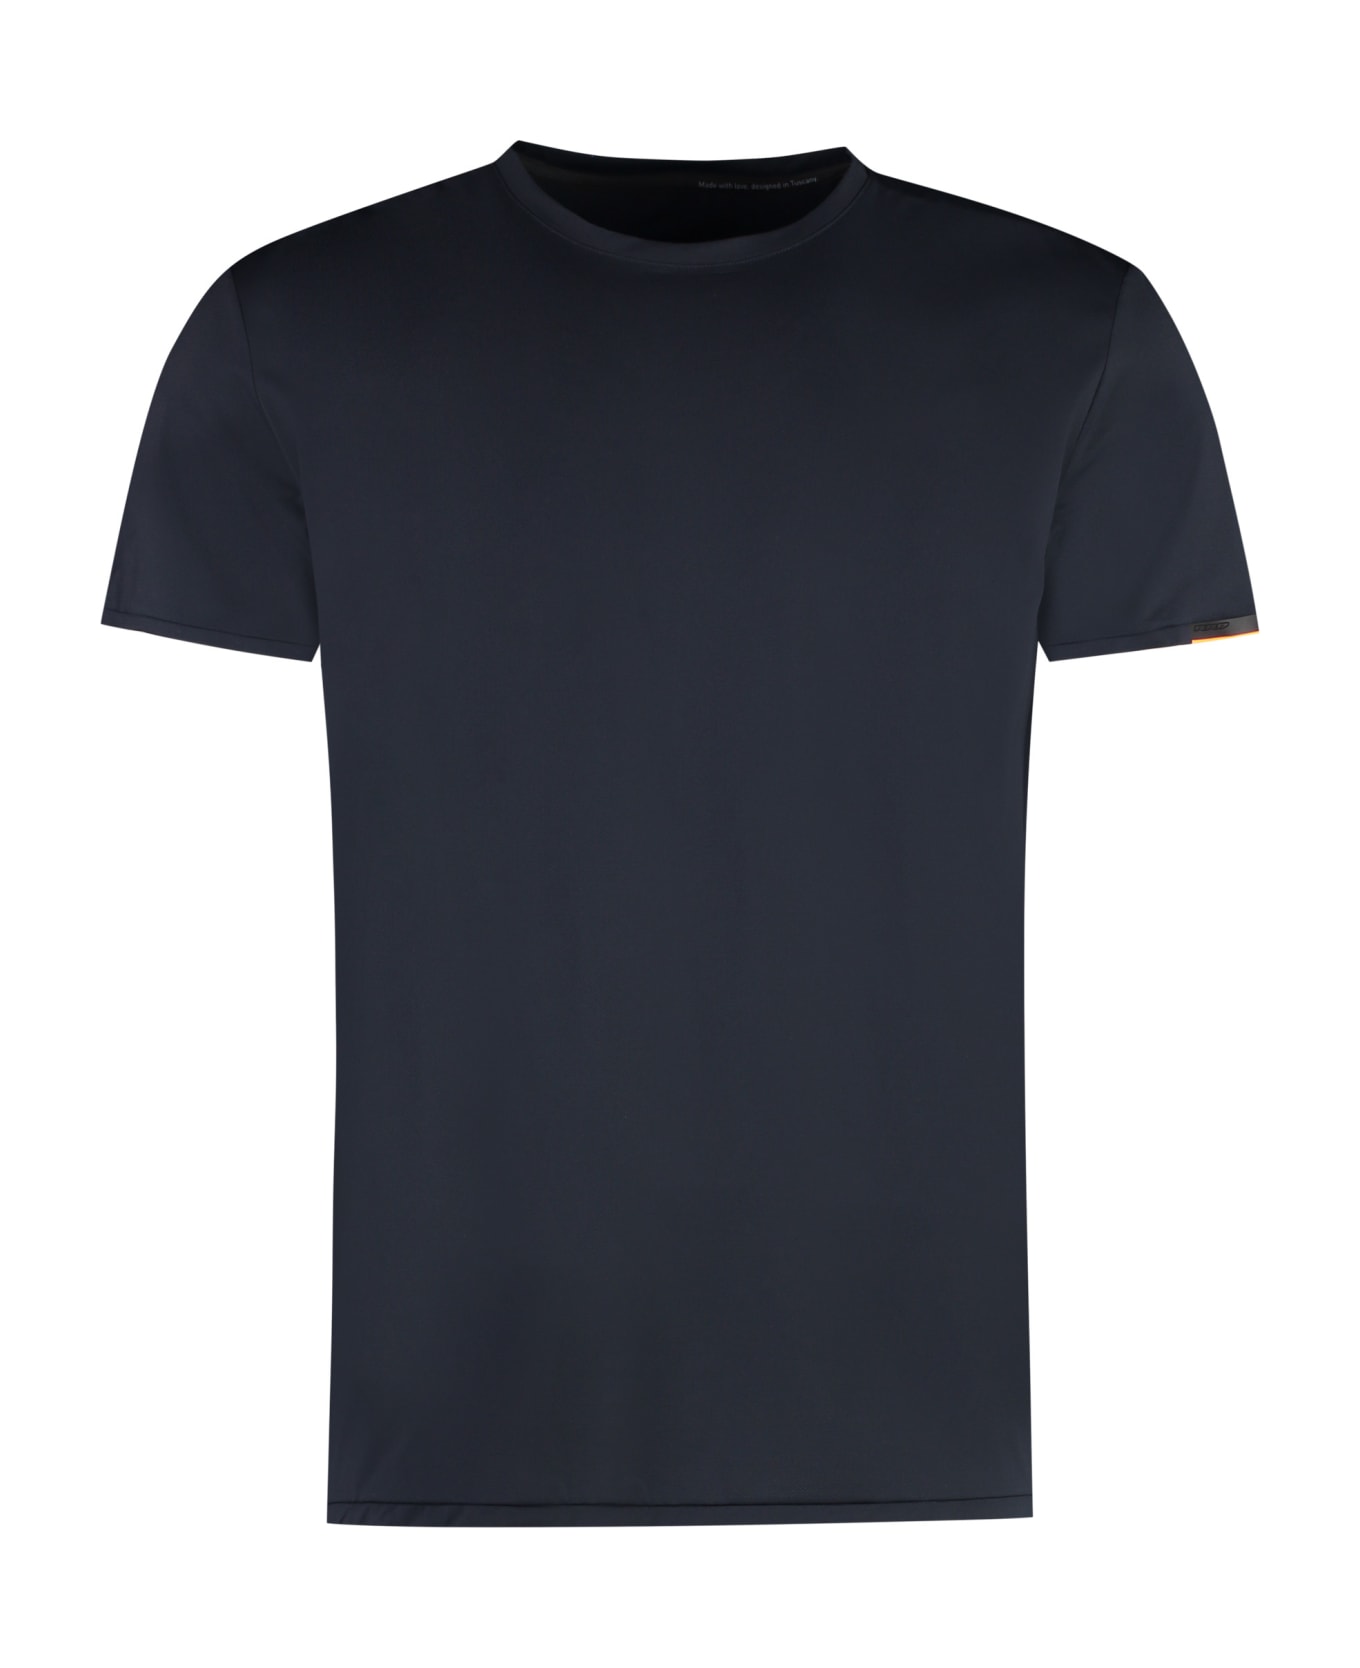 RRD - Roberto Ricci Design Oxford Techno Fabric T-shirt T-Shirt - BLUE BLACK